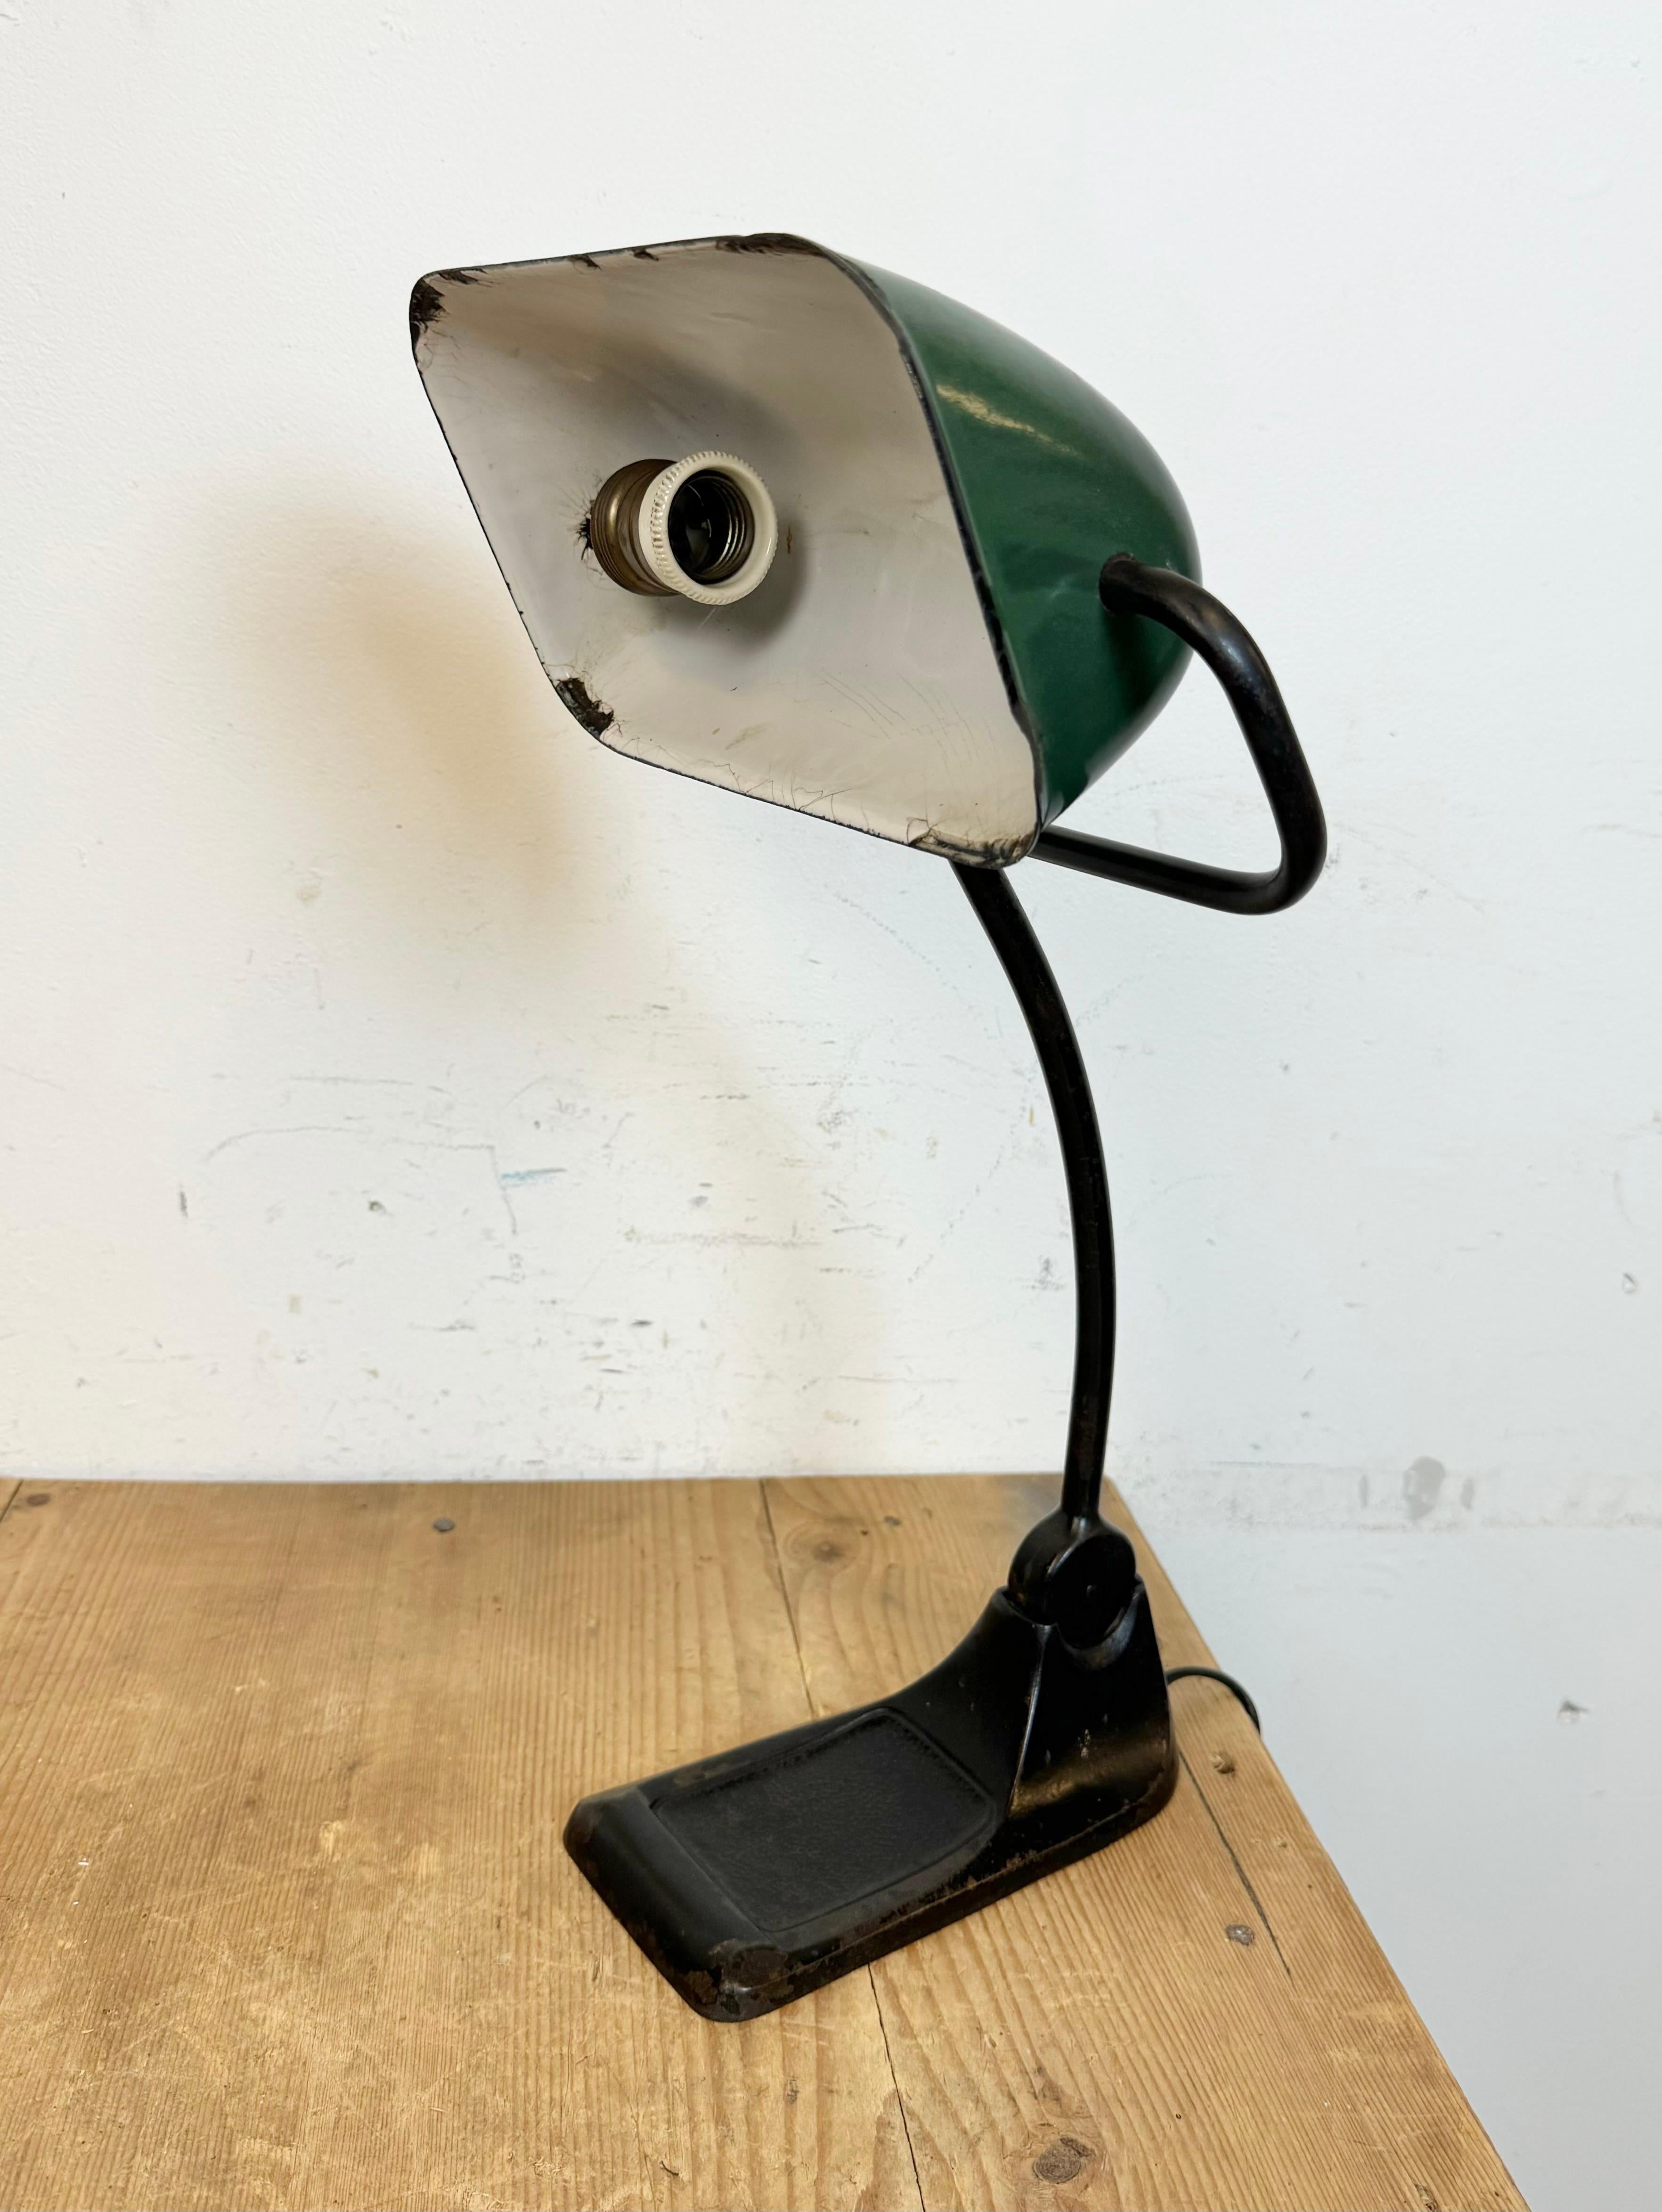 Grüne Emaille-Banklampe aus BUR, Vintage, 1930er Jahre (20. Jahrhundert) im Angebot